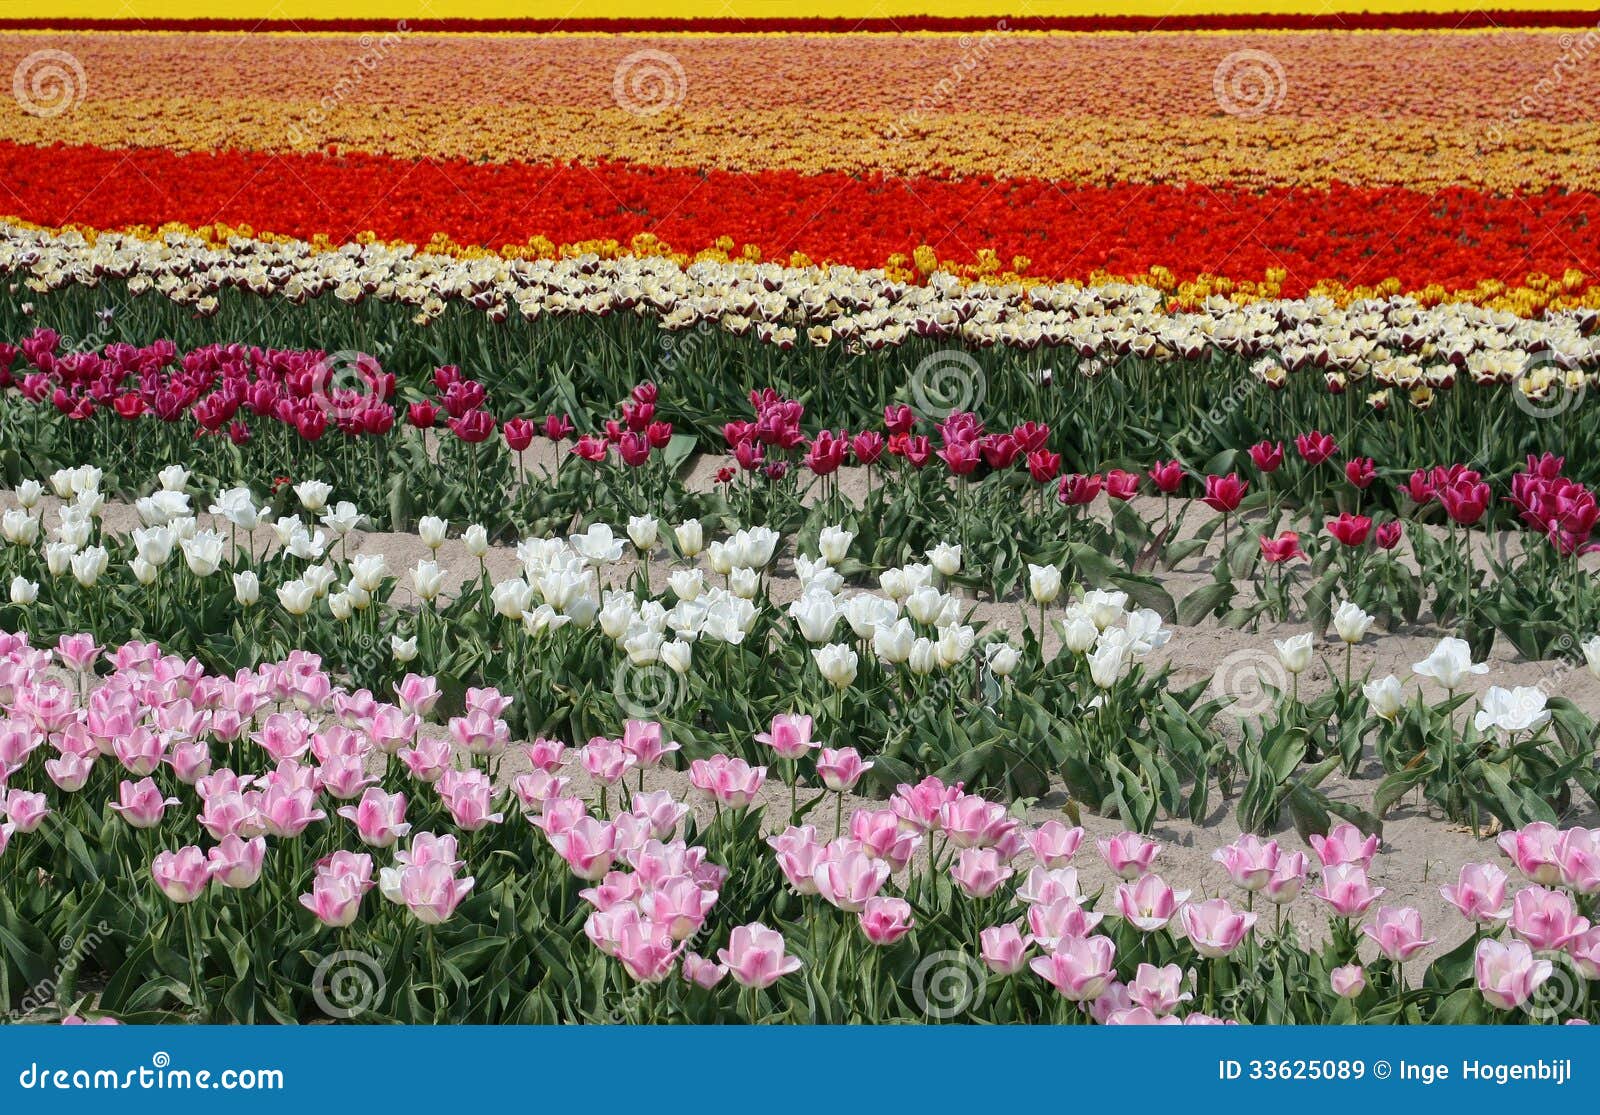 flowerfields in rainbow colors, flowerculture in dutch noordoostpolder,netherlands